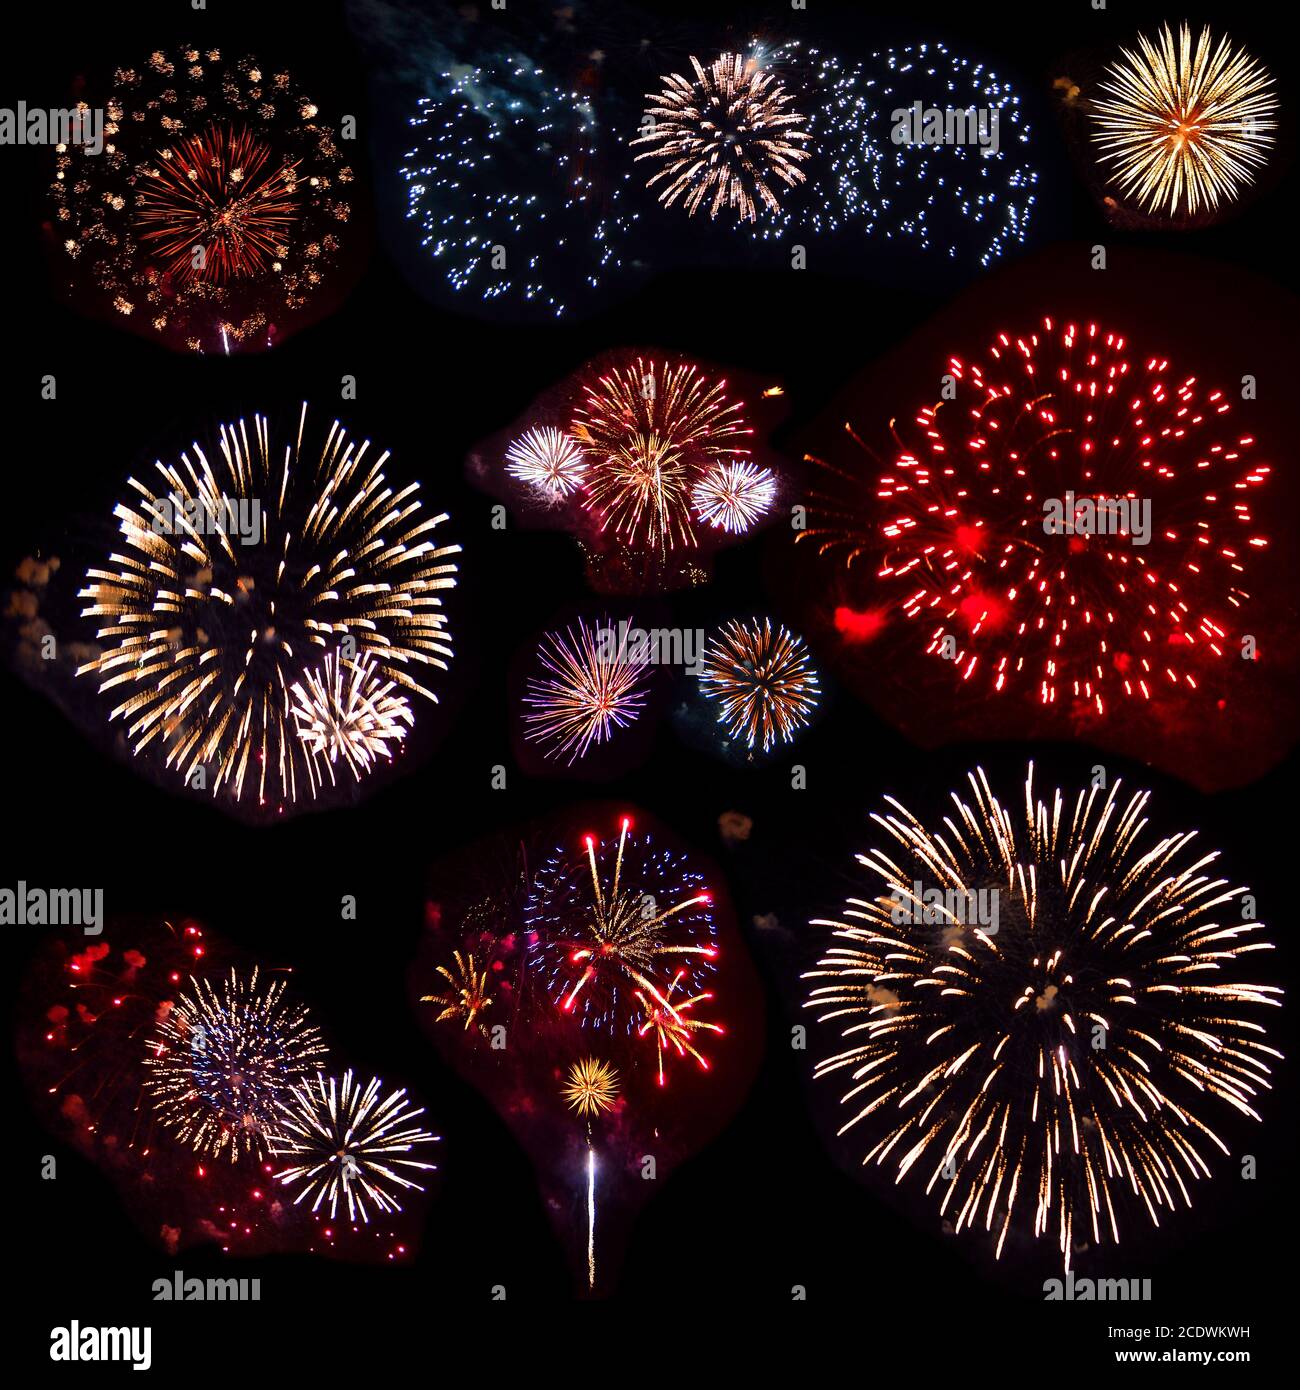 Colorful set of eleven exploding fireworks, isolated on black background Stock Photo